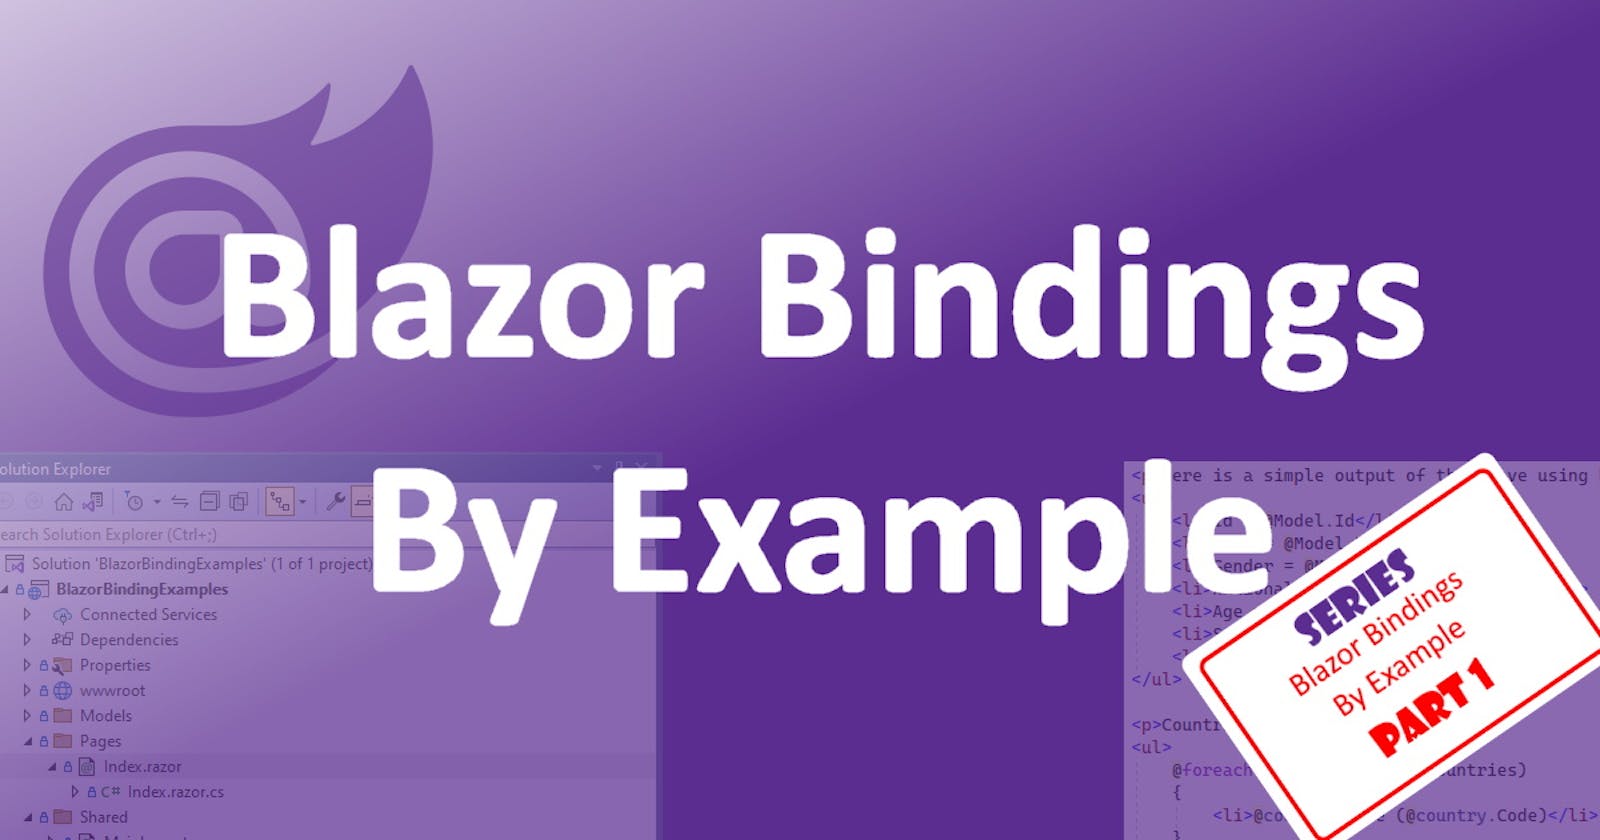 Blazor Bindings By Example - Part 1